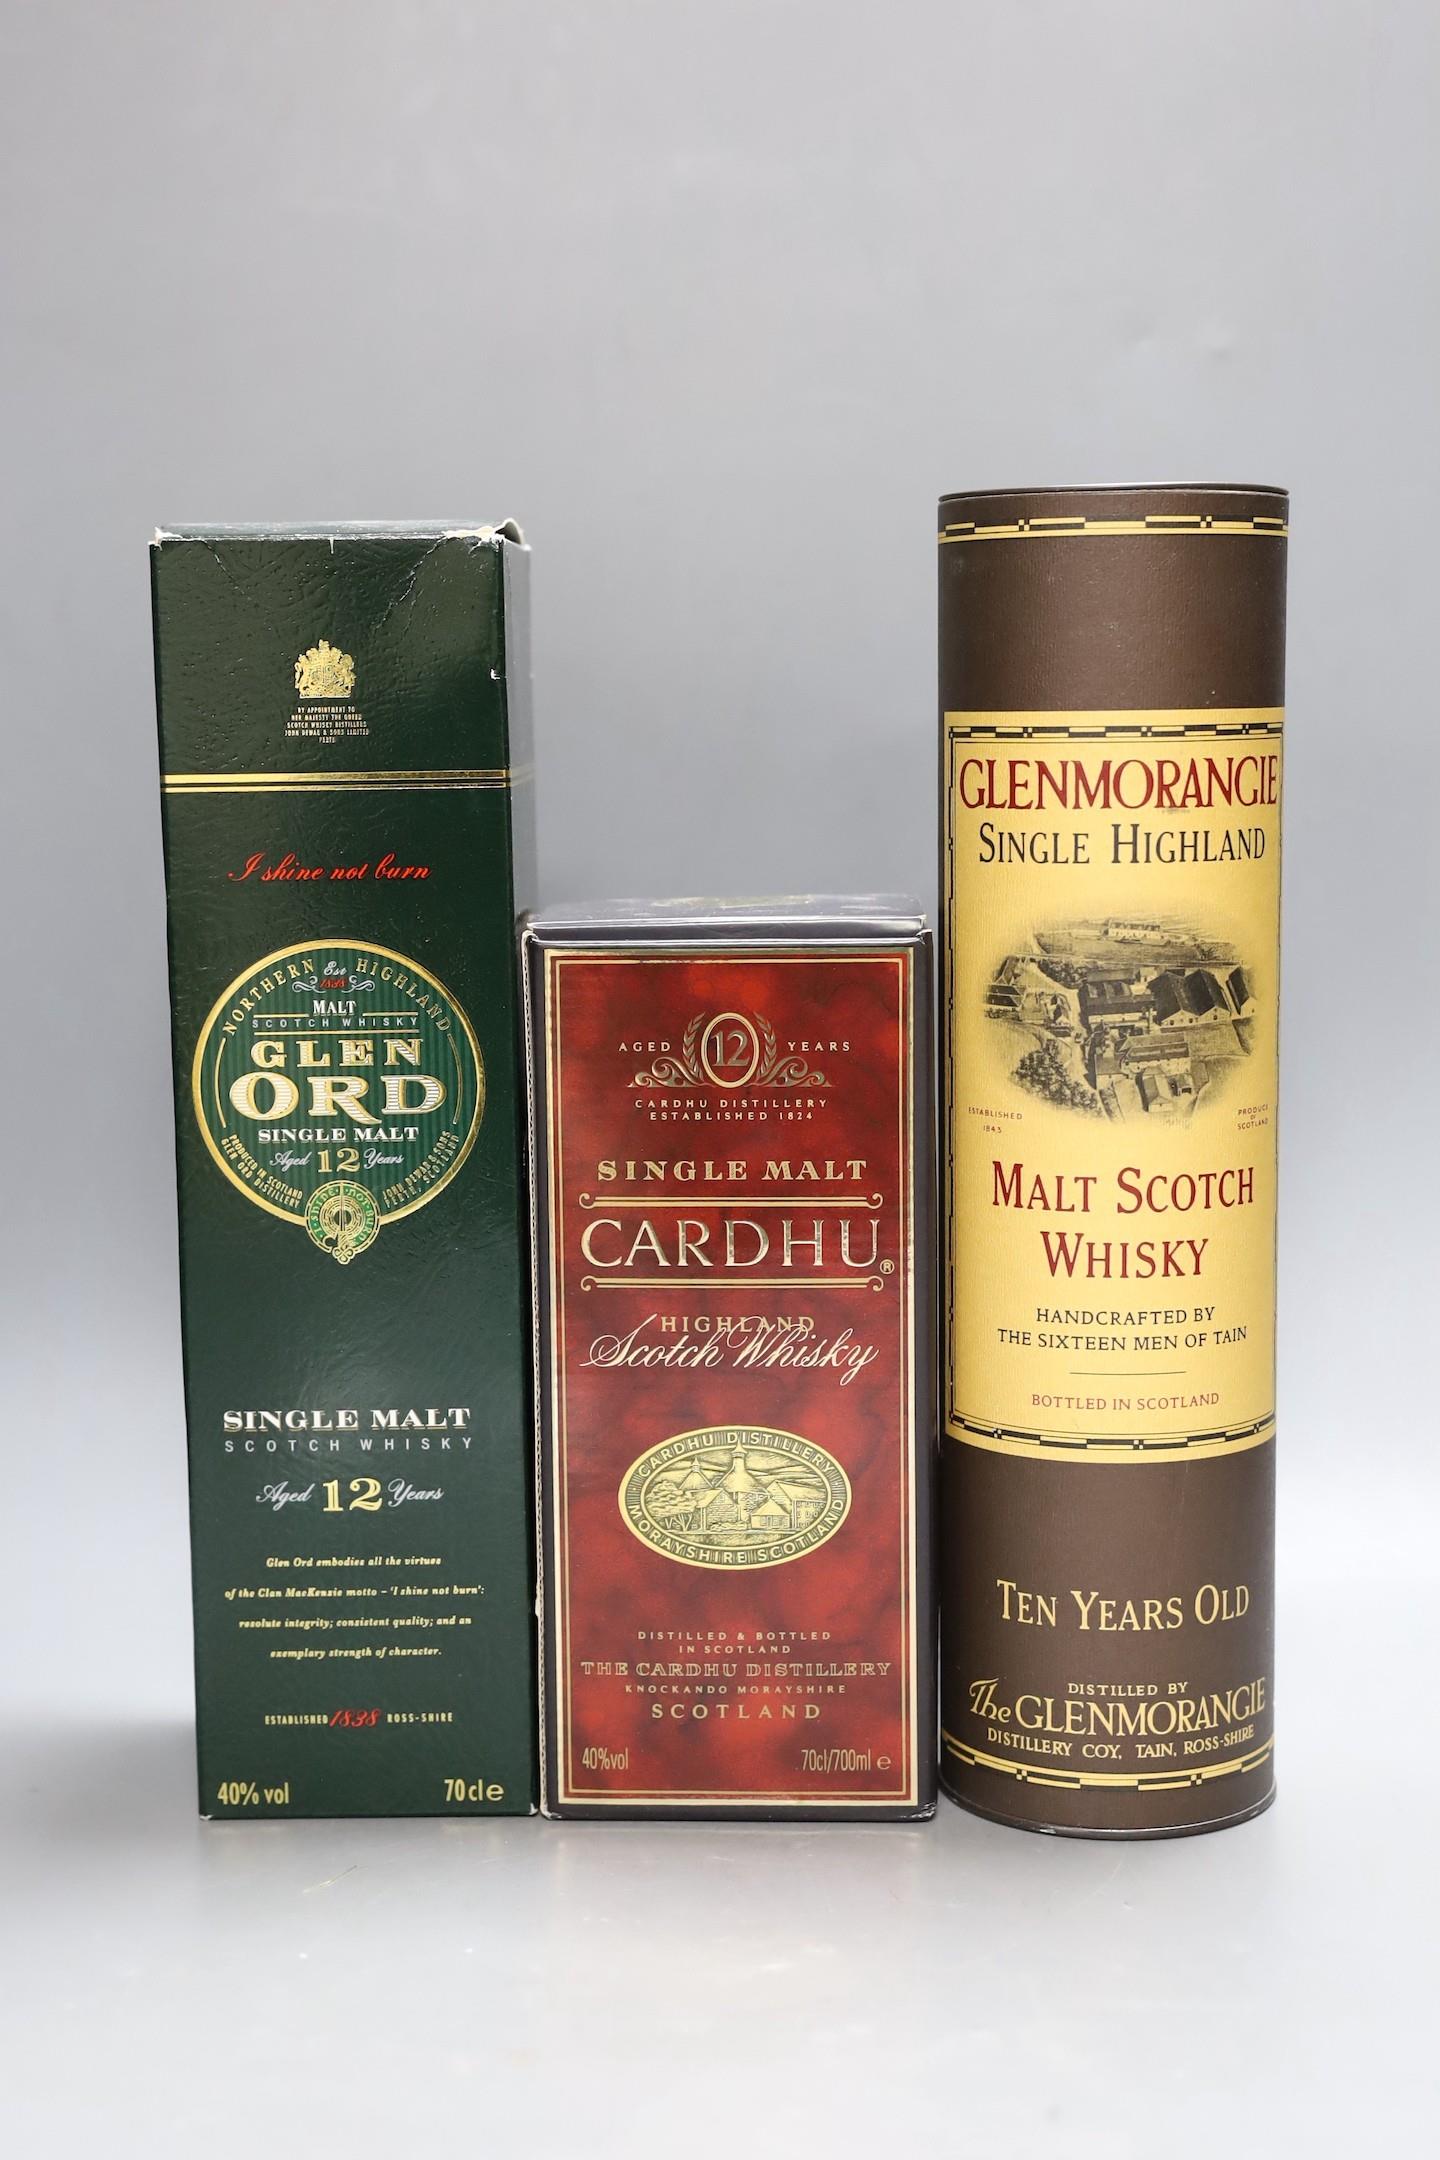 Three assorted bottles of Whisky: Cardhu, Glen Ord and Glenmorangie